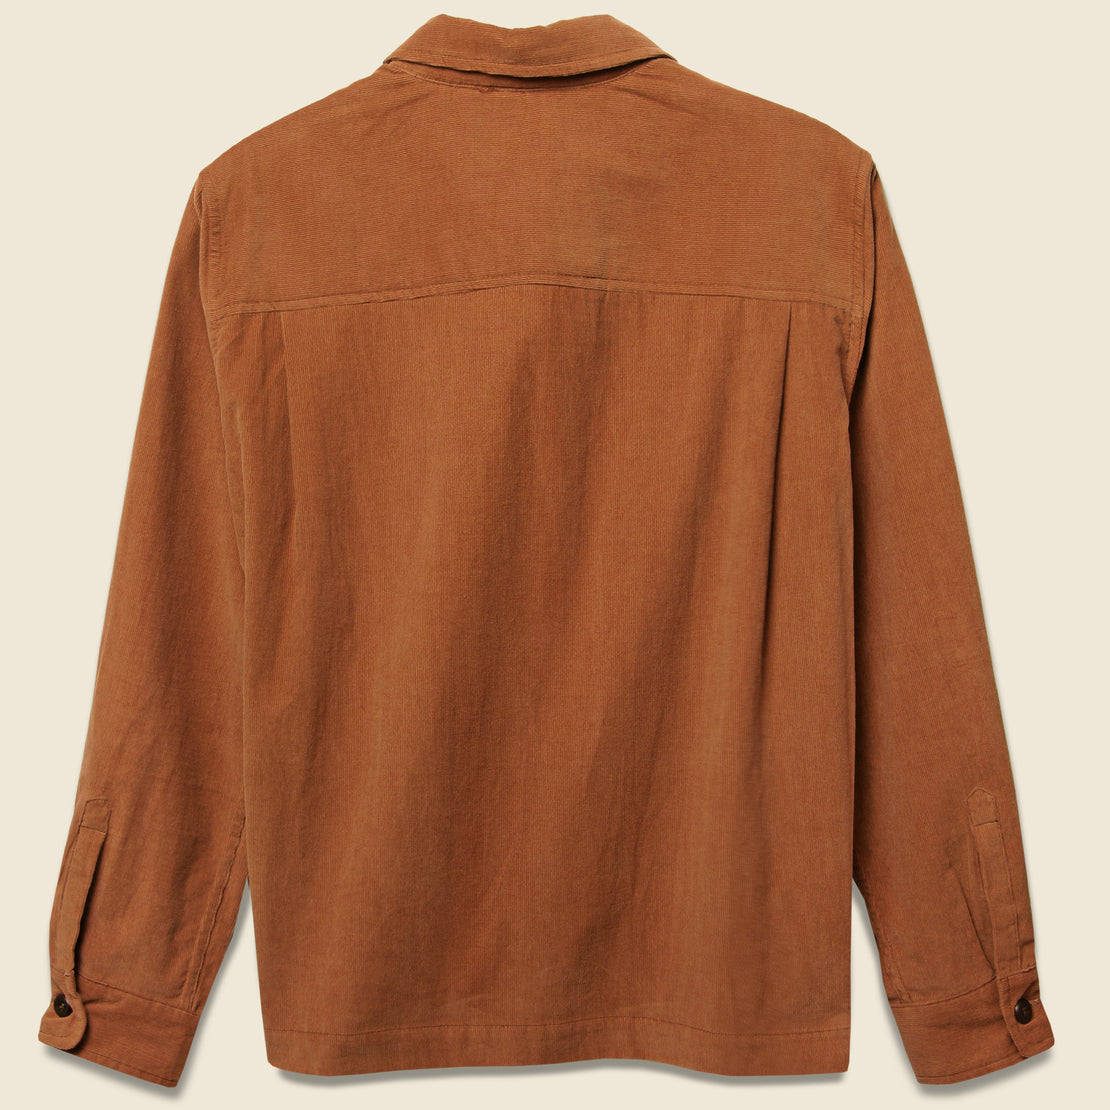 Kettering Overshirt - Rust Corduroy - Bridge & Burn - STAG Provisions - W - Outerwear - Coat/Jacket